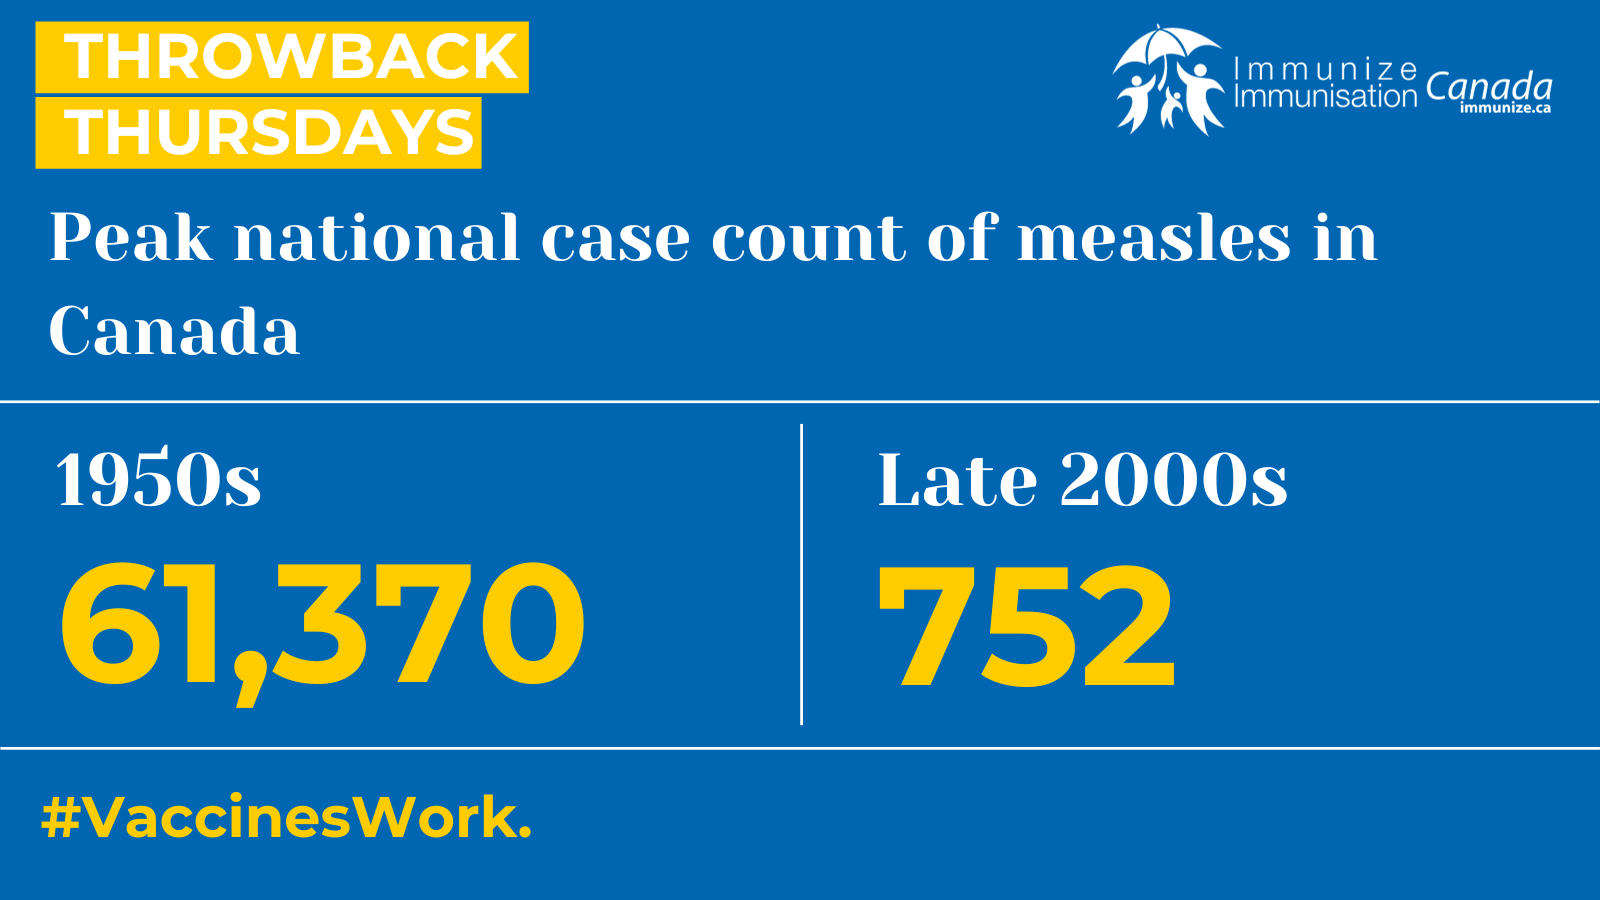 Throwback Thursdays (Twitter/X) - peak measles